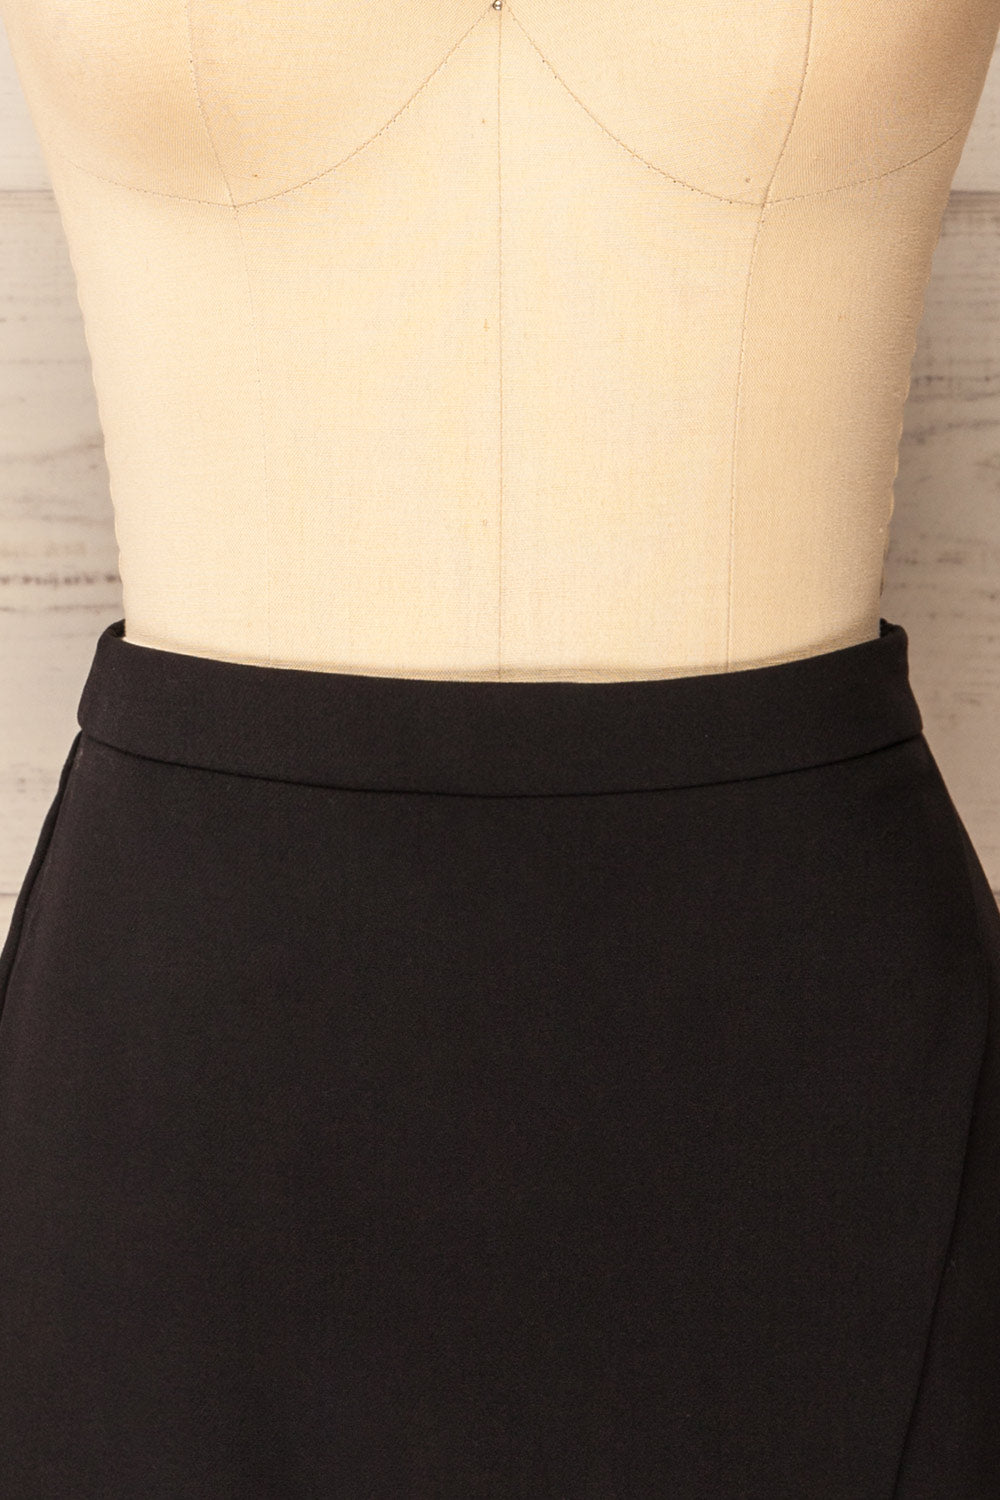 Bilbao Black Short Skirt w/ Slit | La petite garçonne  front close-up